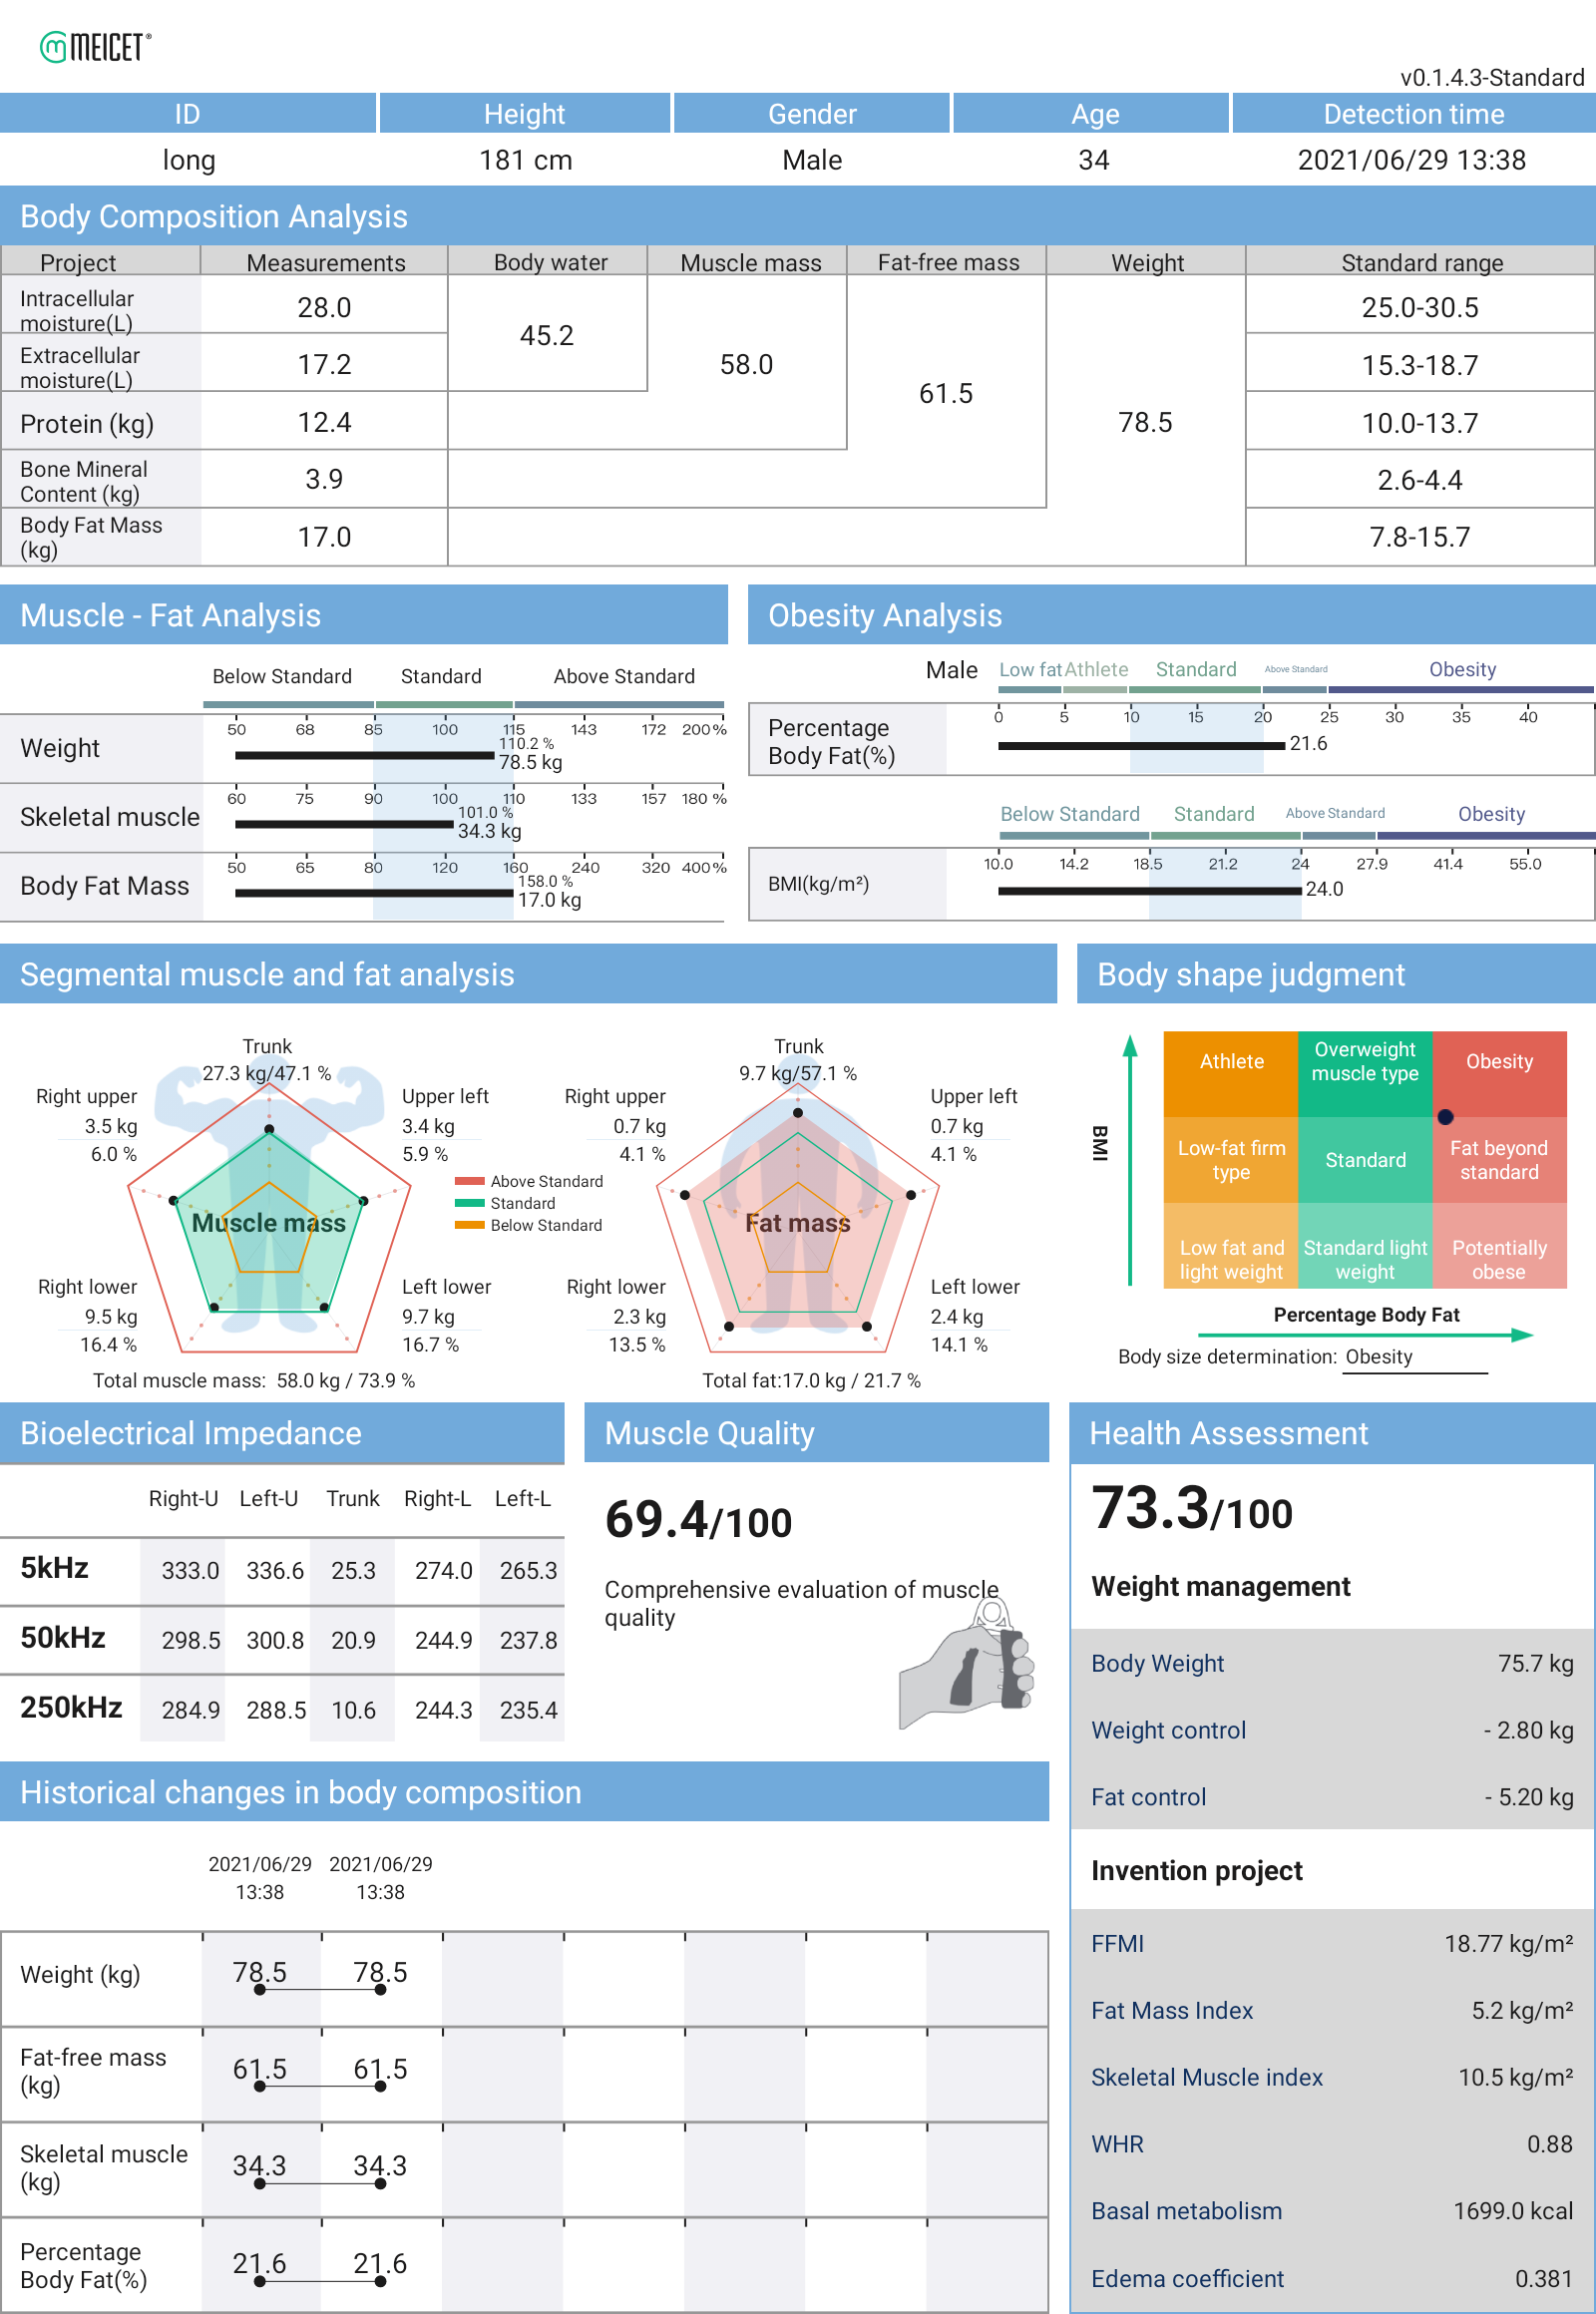 Standard Version report of body composition analyzer